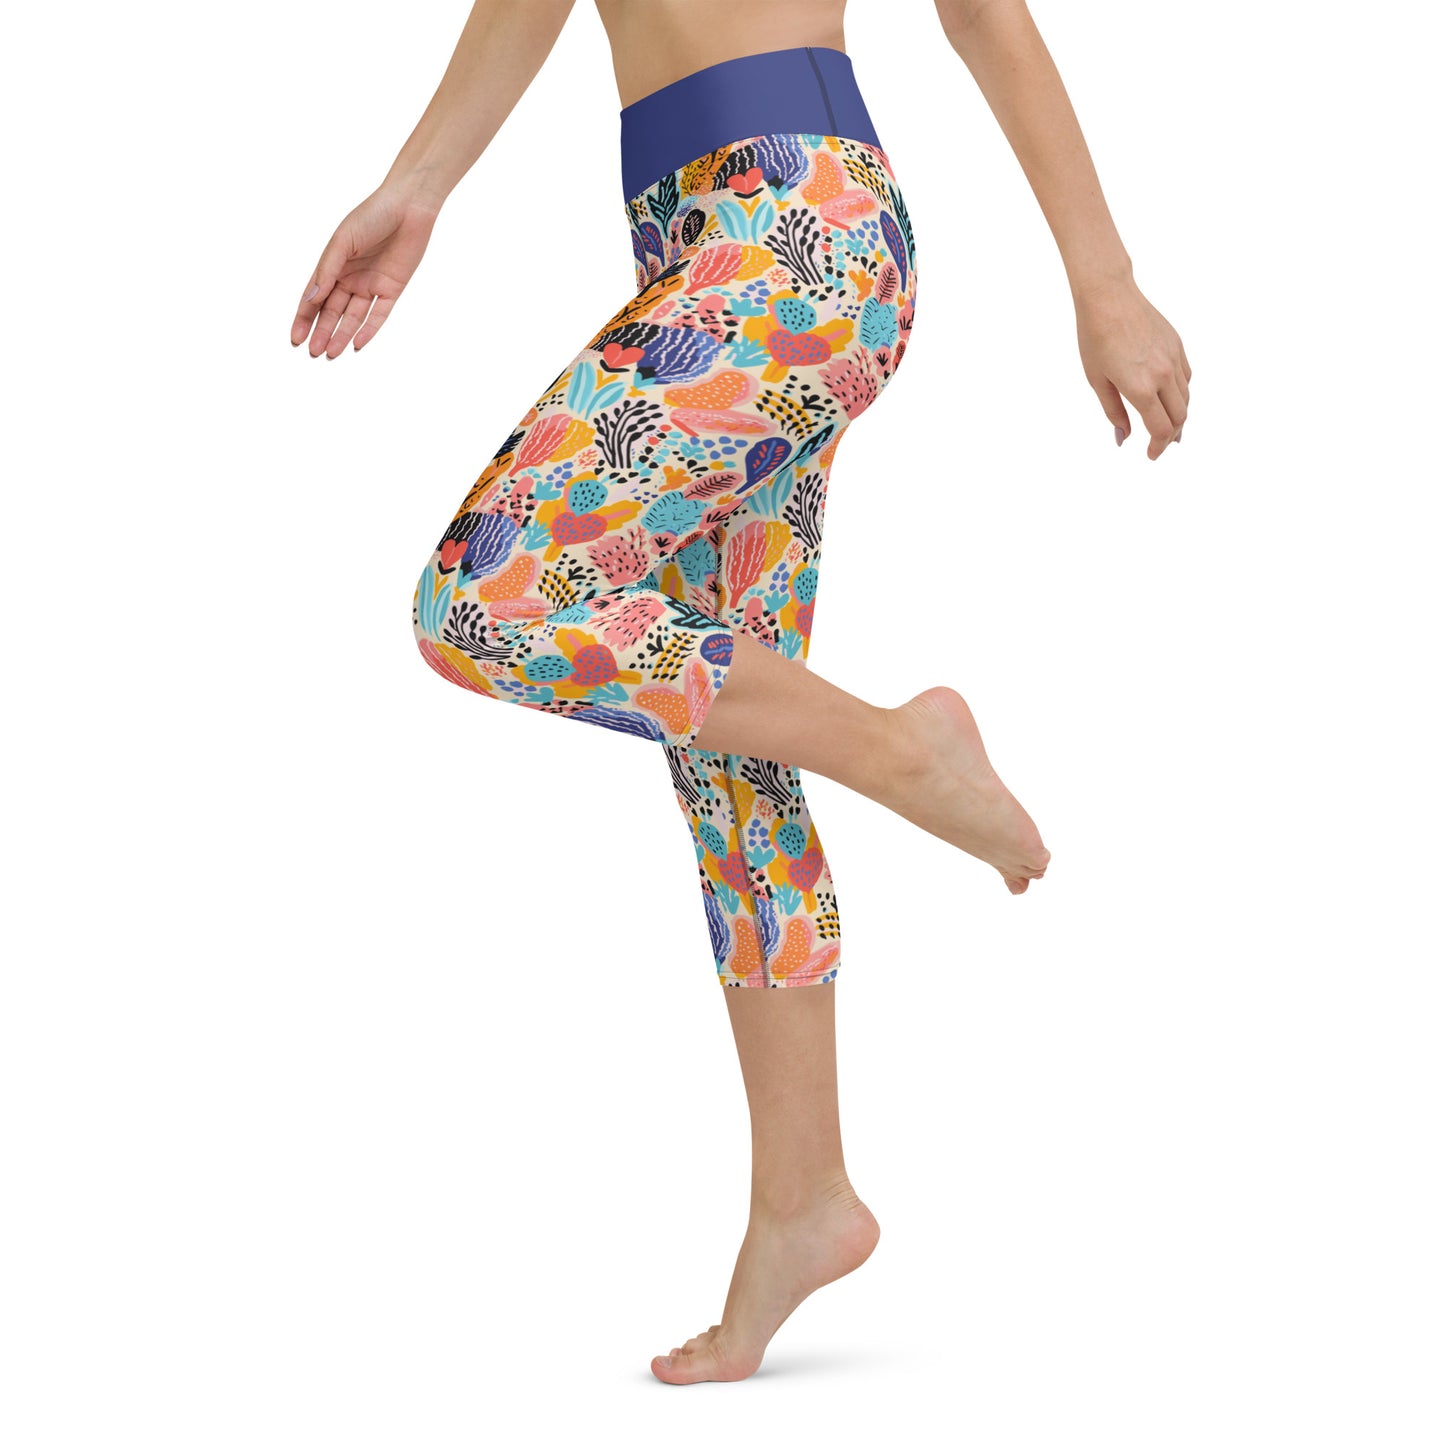 Monopoli Capri High Waist Yoga Leggings / Pants with Inside Pocket